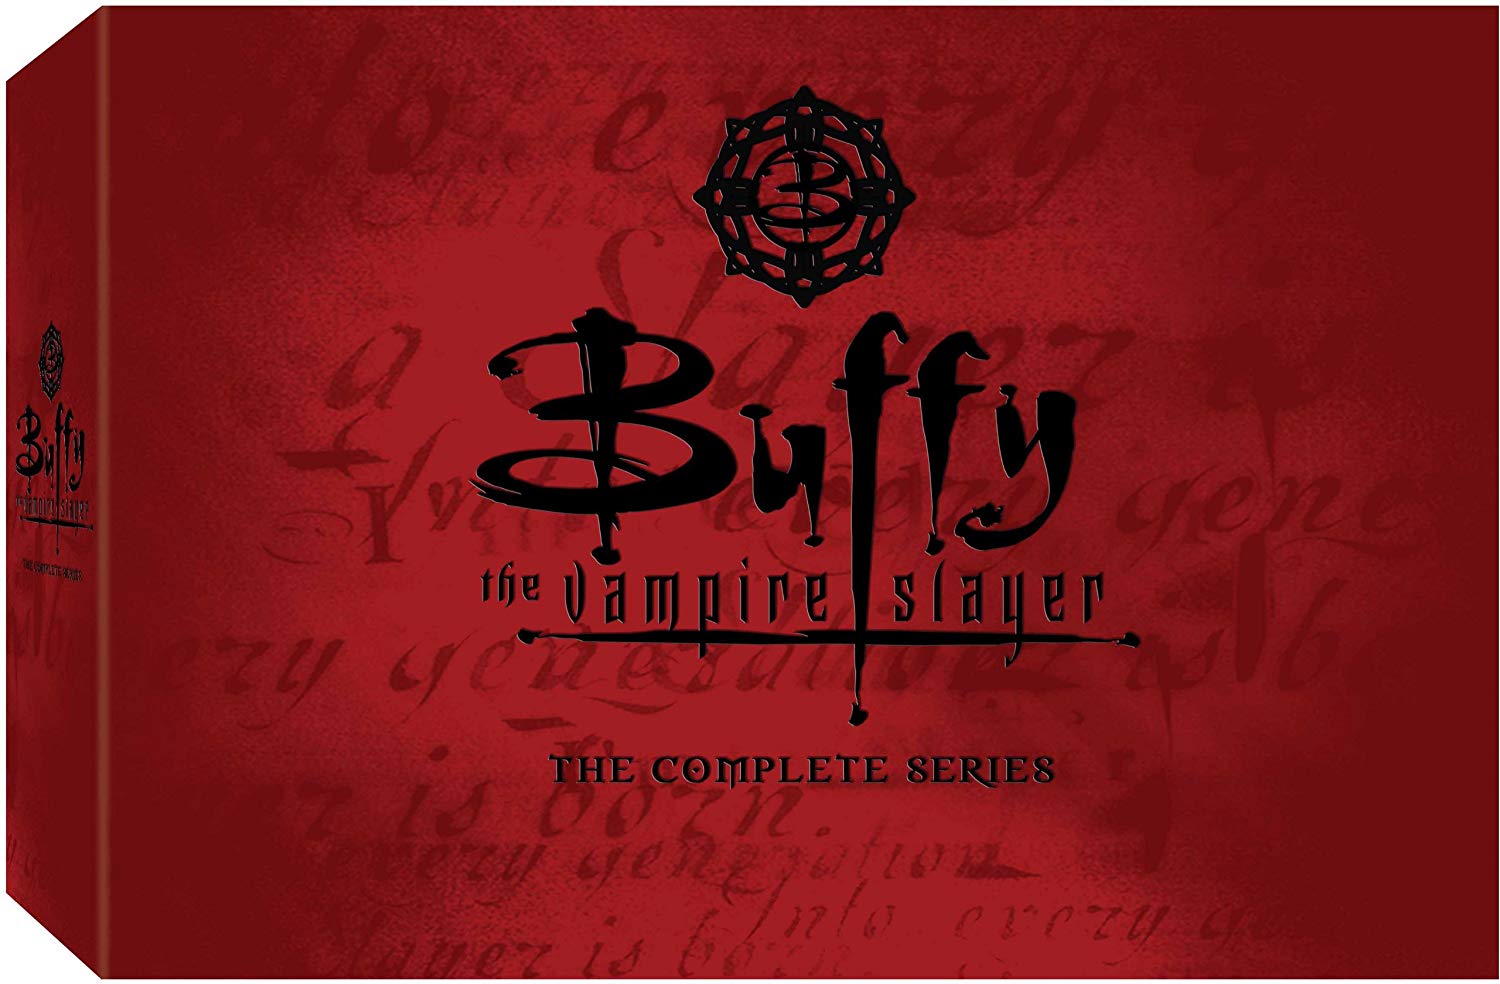 Buffy The Vampire Logo - Amazon.com: Buffy - The Vampire Slayer (The complete series ...